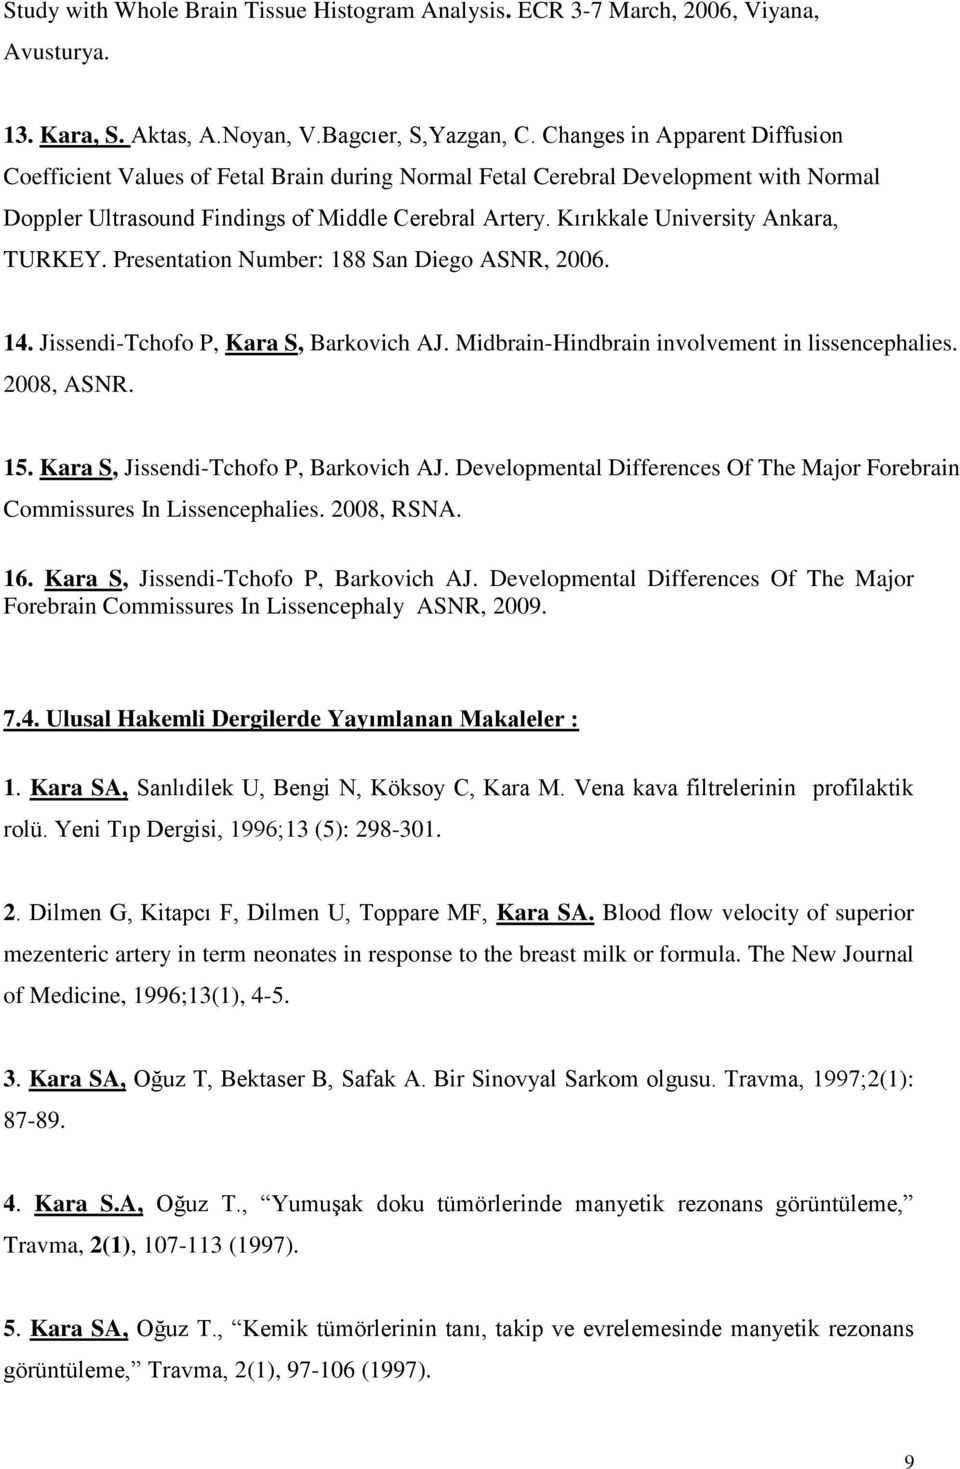 Kırıkkale University Ankara, TURKEY. Presentation Number: 188 San Diego ASNR, 2006. 14. Jissendi-Tchofo P, Kara S, Barkovich AJ. Midbrain-Hindbrain involvement in lissencephalies. 2008, ASNR. 15.